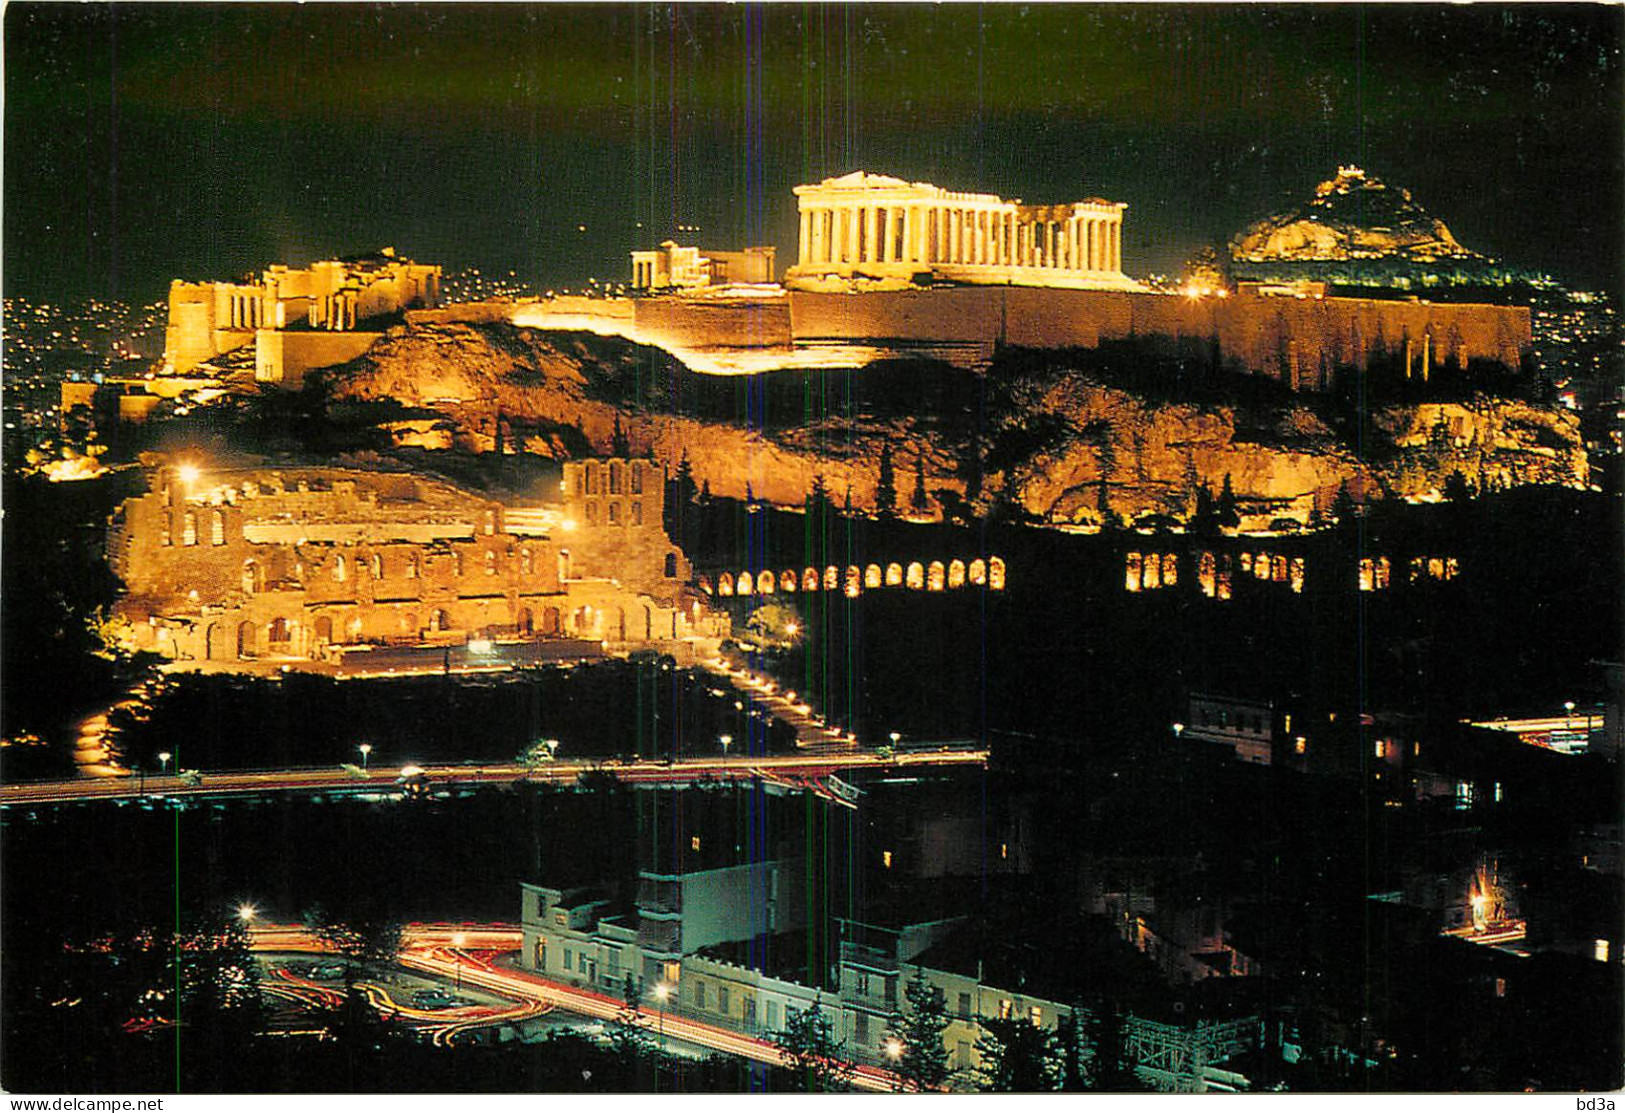  GRECES  ATHENES - Griechenland